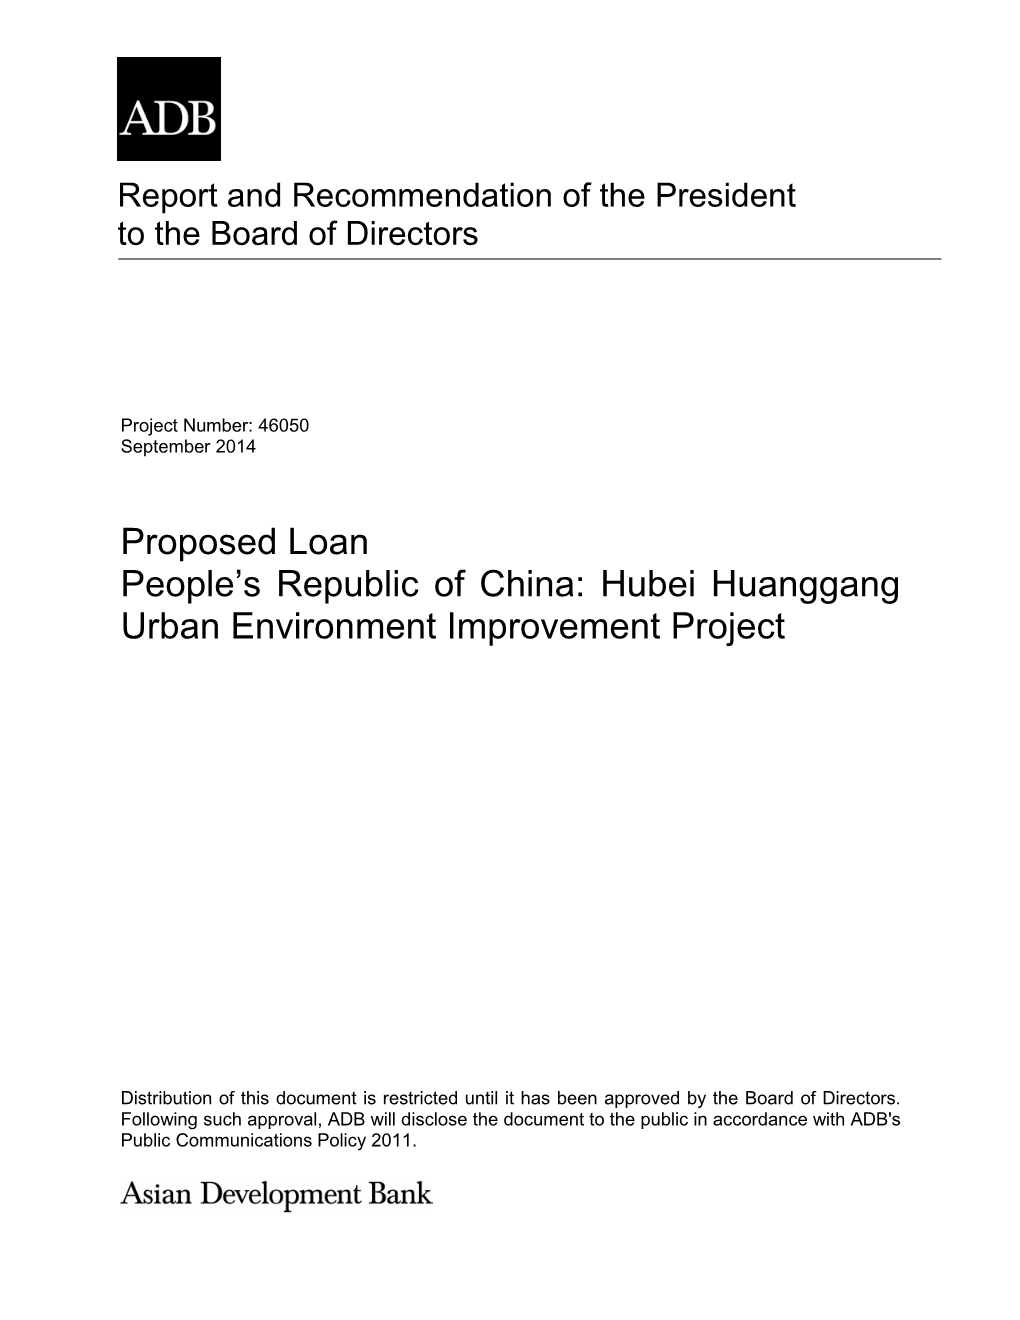 RRP: PRC: Hubei Huanggang Urban Environment Improvement Project